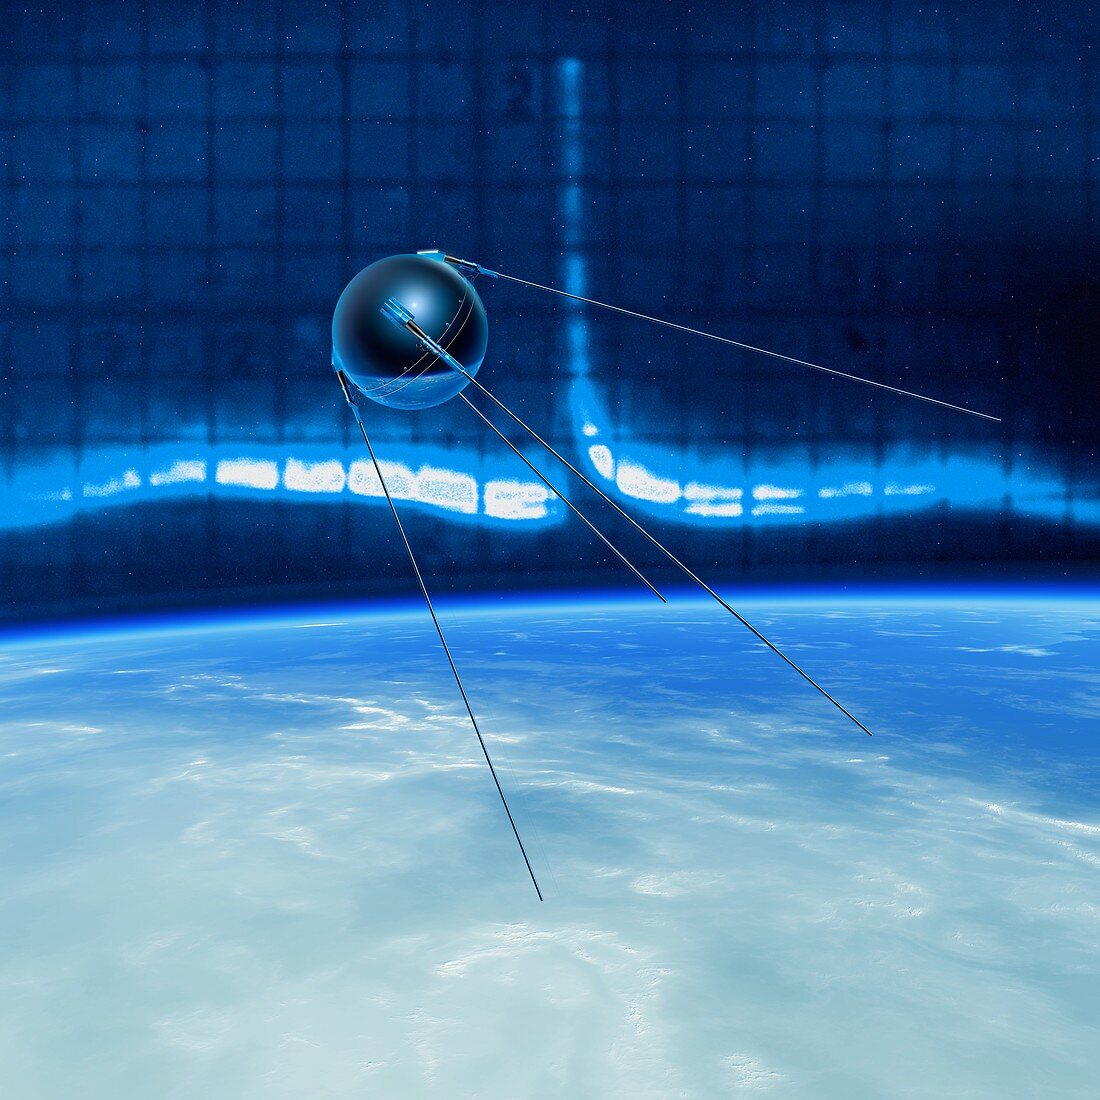 Sputnik 1 transmitting in Earth orbit, illustration